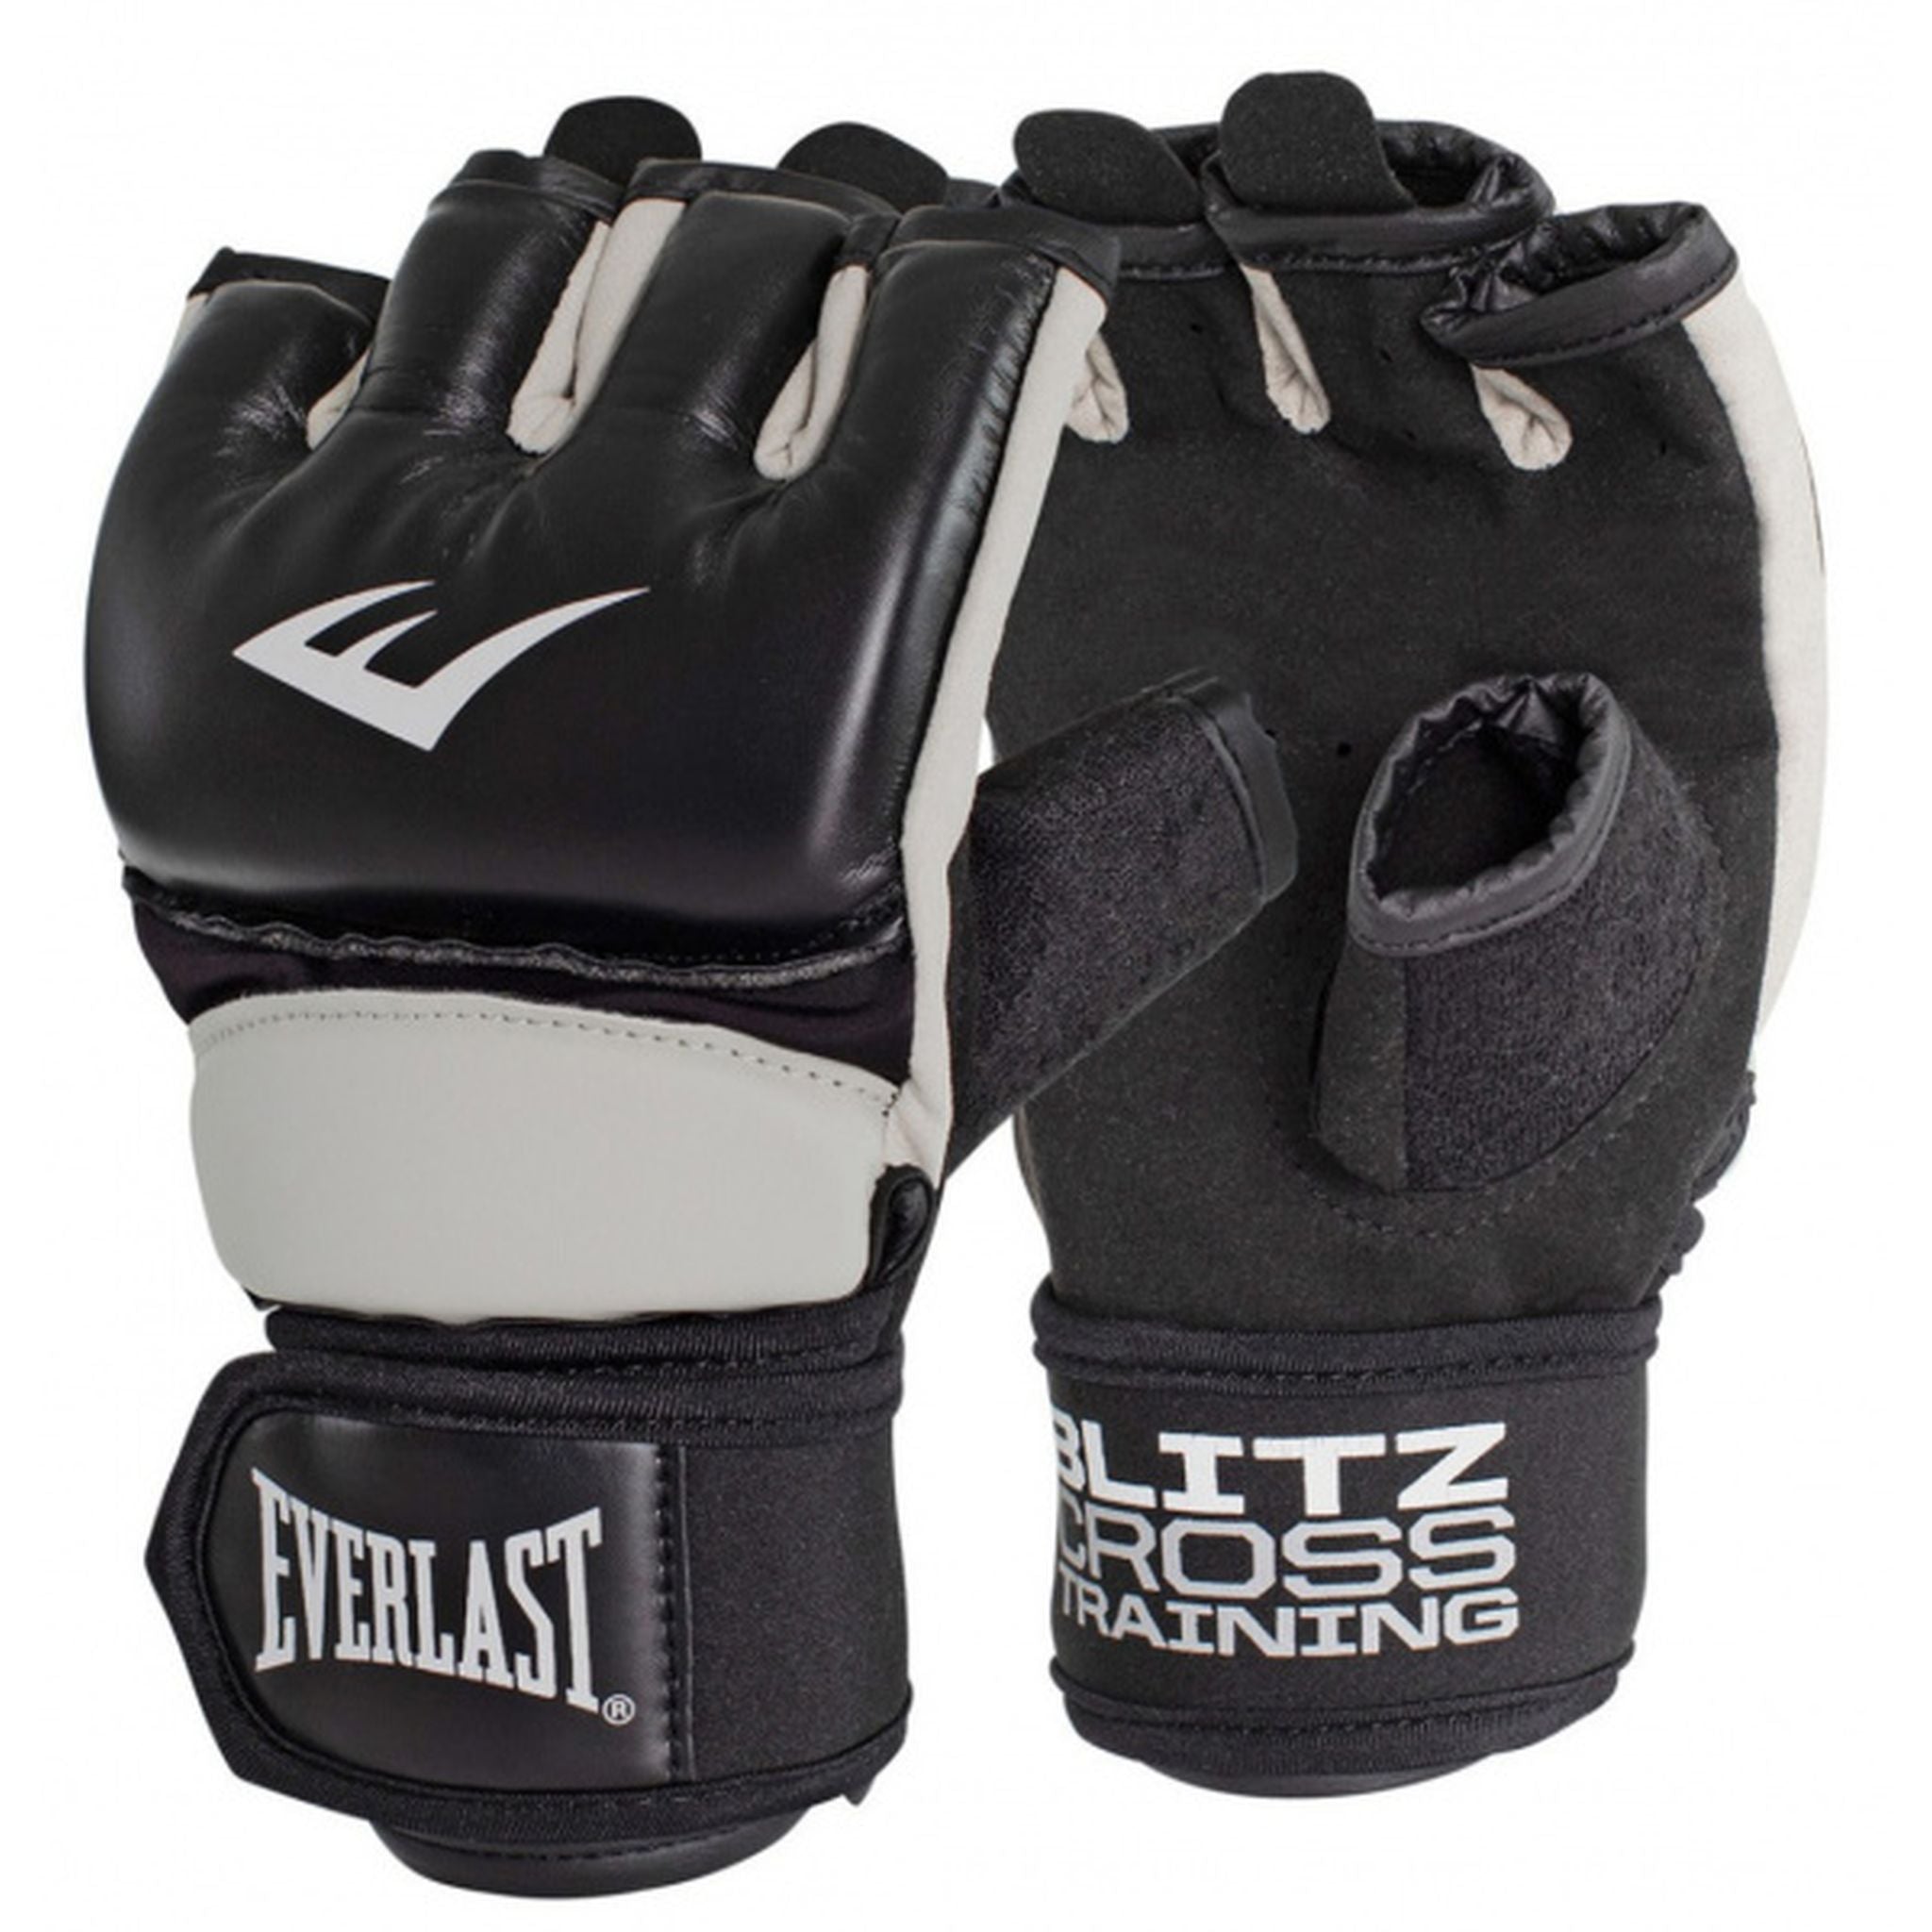 Everlast Blitz Training Glove